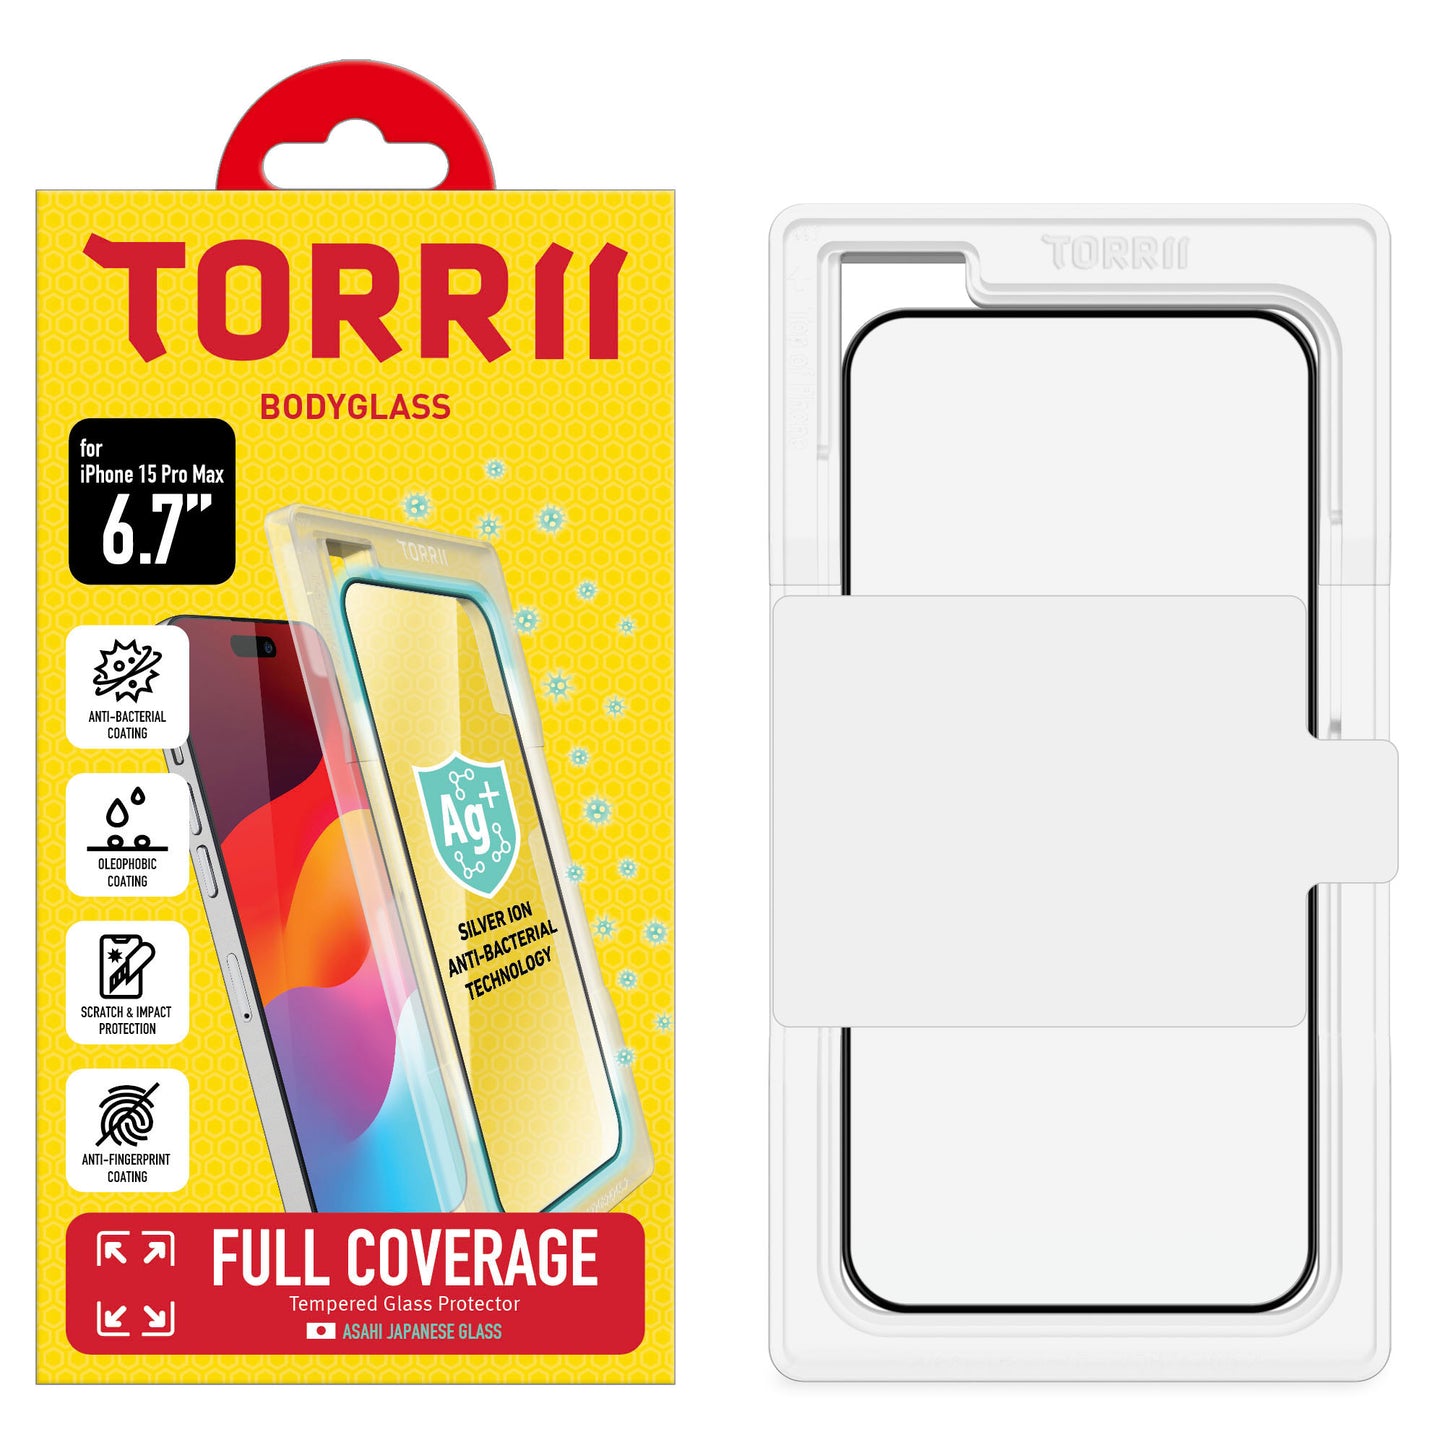 Torrii BODYGLASS 抗菌塗層全覆蓋玻璃保護貼 for iPhone 15 Pro Max